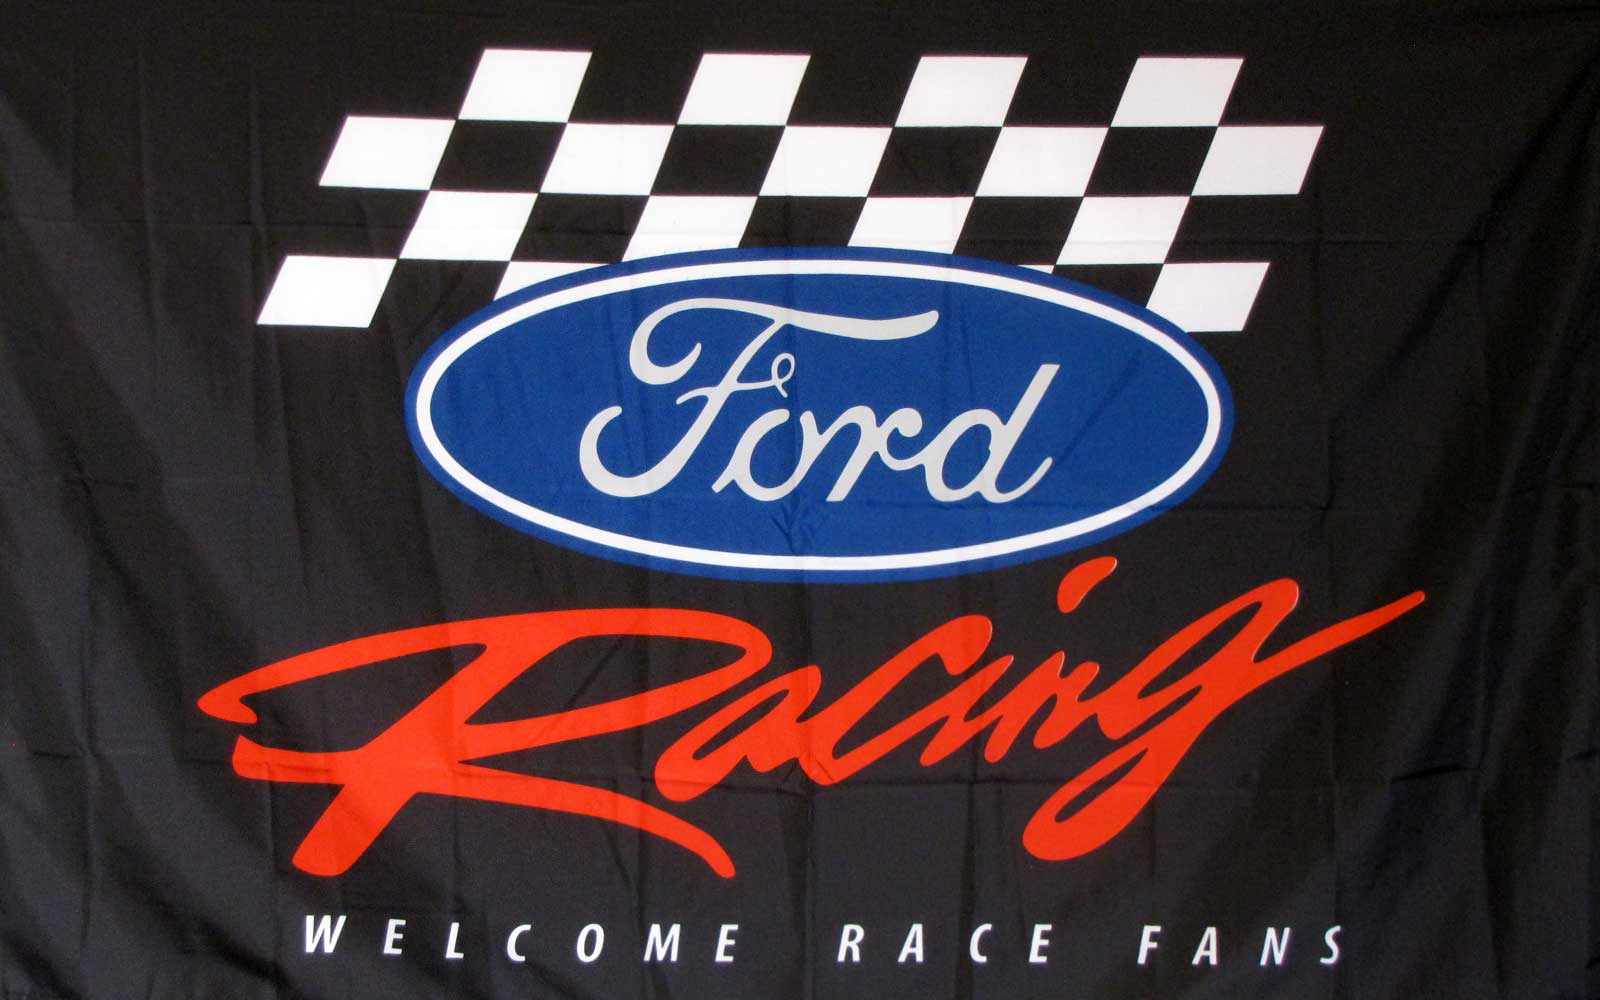 Cool Race Logo - Cool Ford Racing Logos - image #38